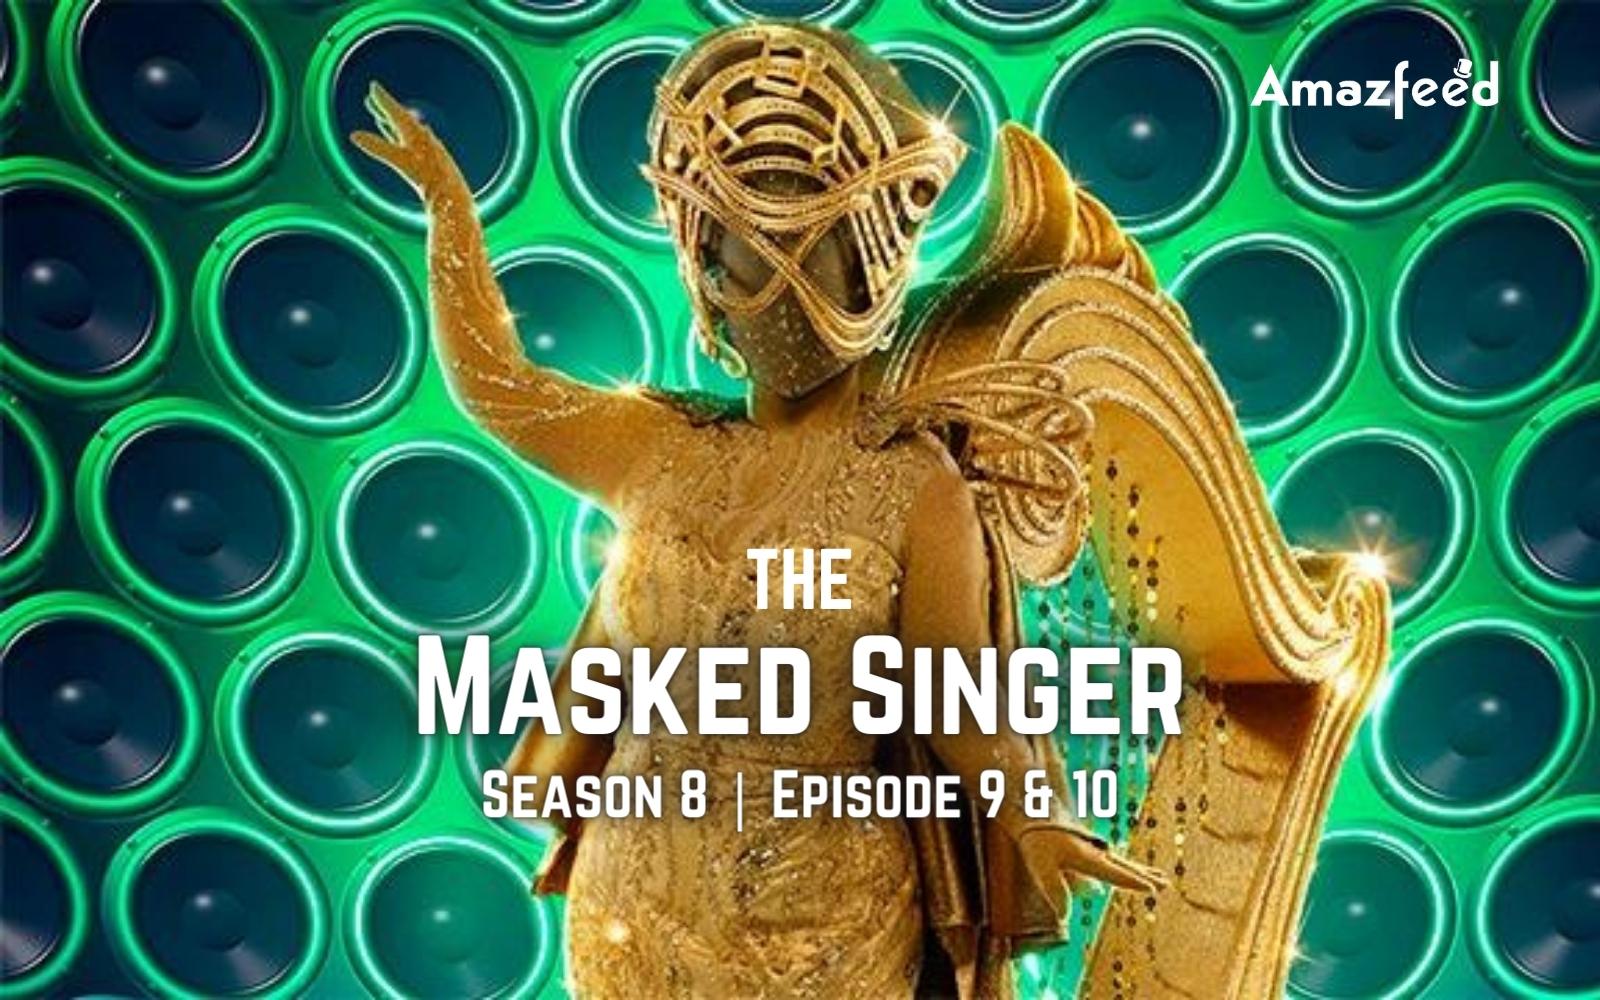 The Masked Singer Season 8 Episode 9 & 10